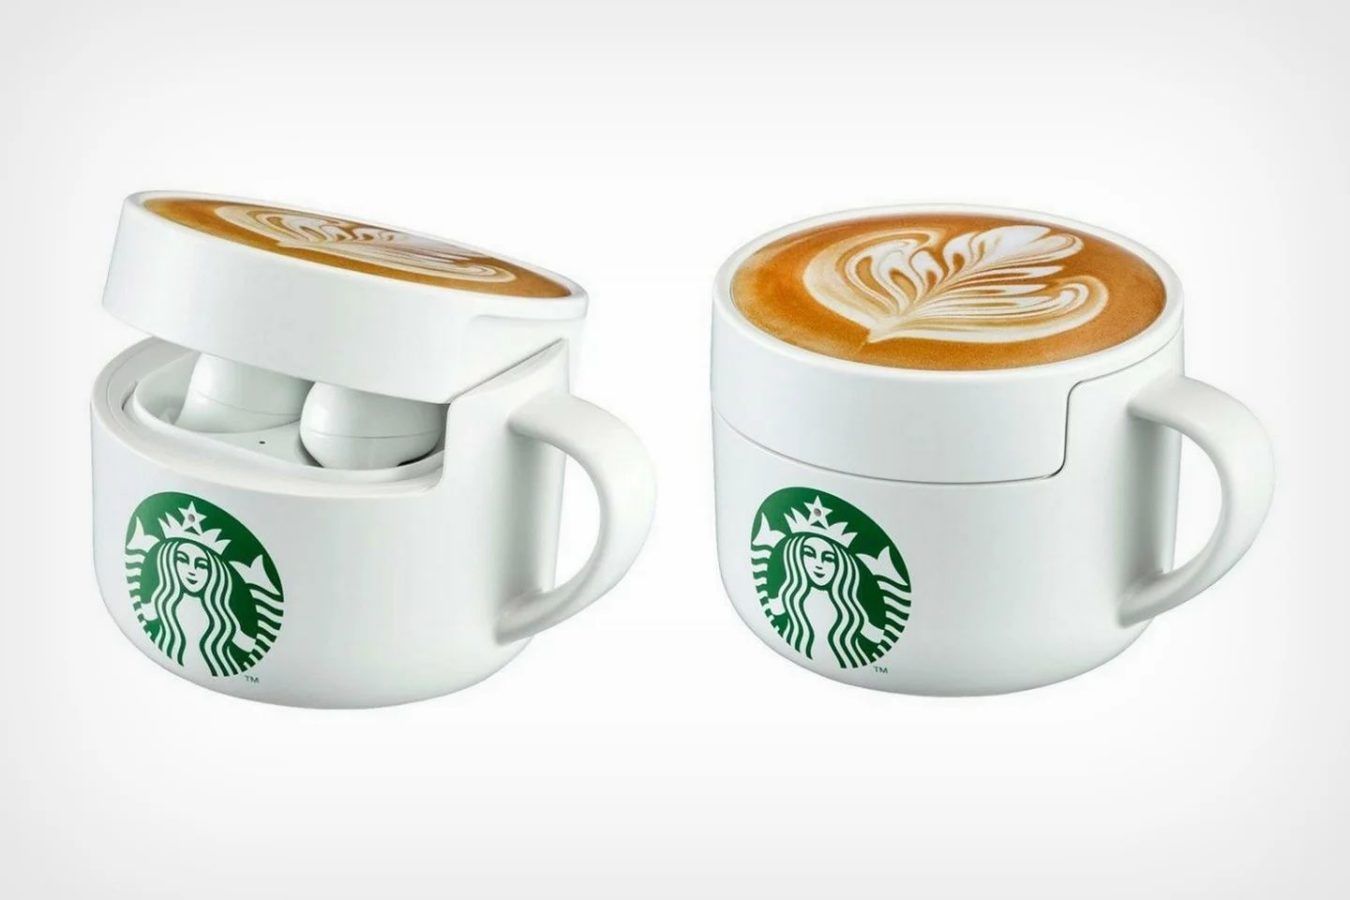 The Starbucks x Samsung collab is a coffee geek’s dream come true